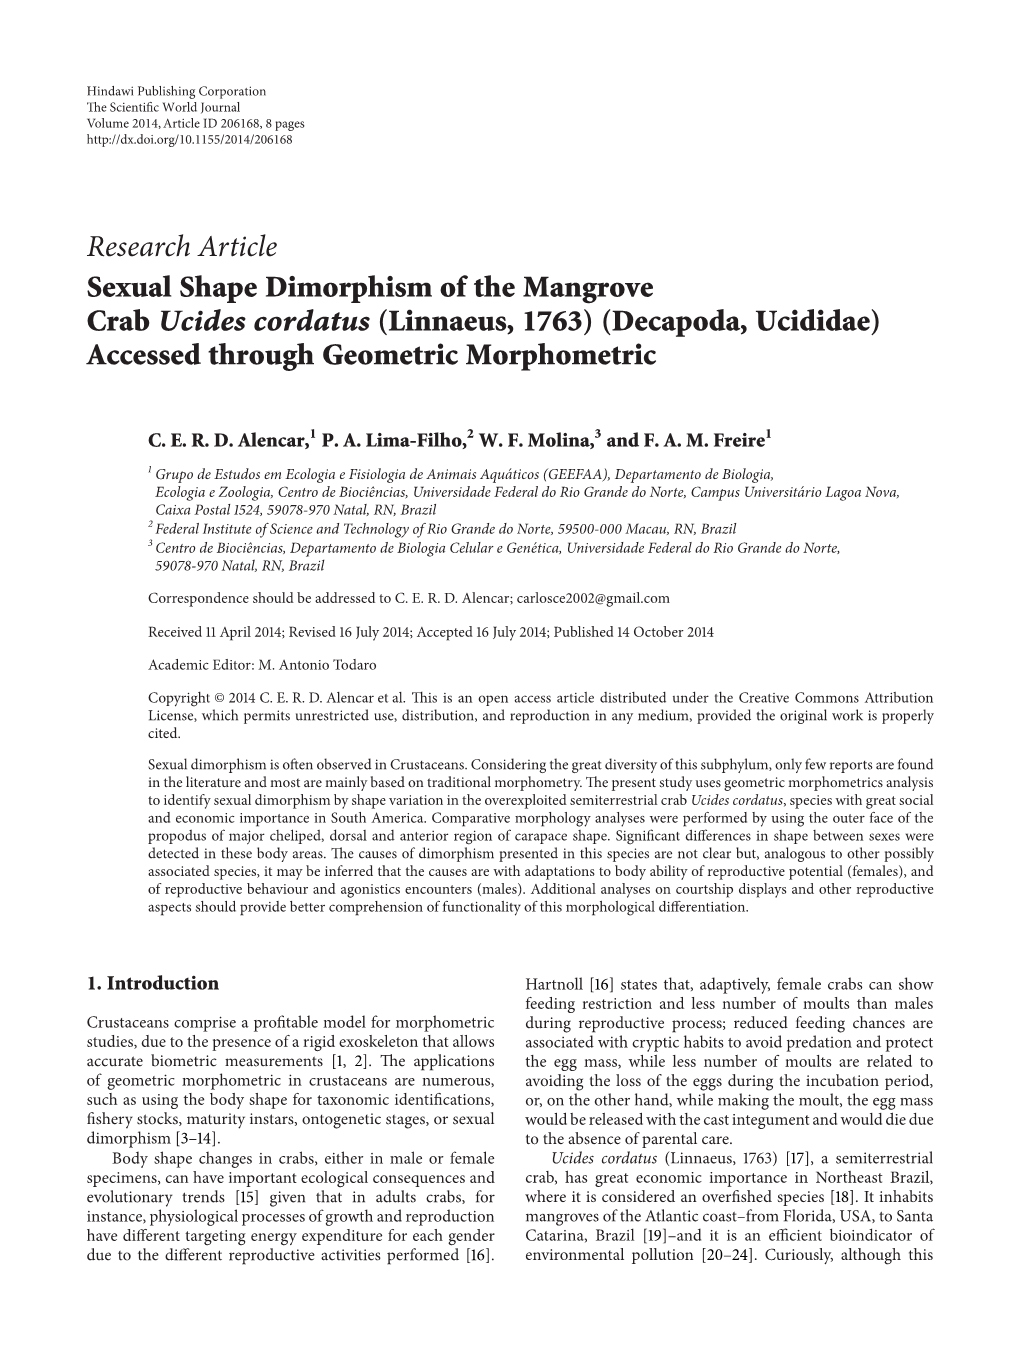 Research Article Sexual Shape Dimorphism of the Mangrove Crab Ucides Cordatus (Linnaeus, 1763) (Decapoda, Ucididae) Accessed Through Geometric Morphometric